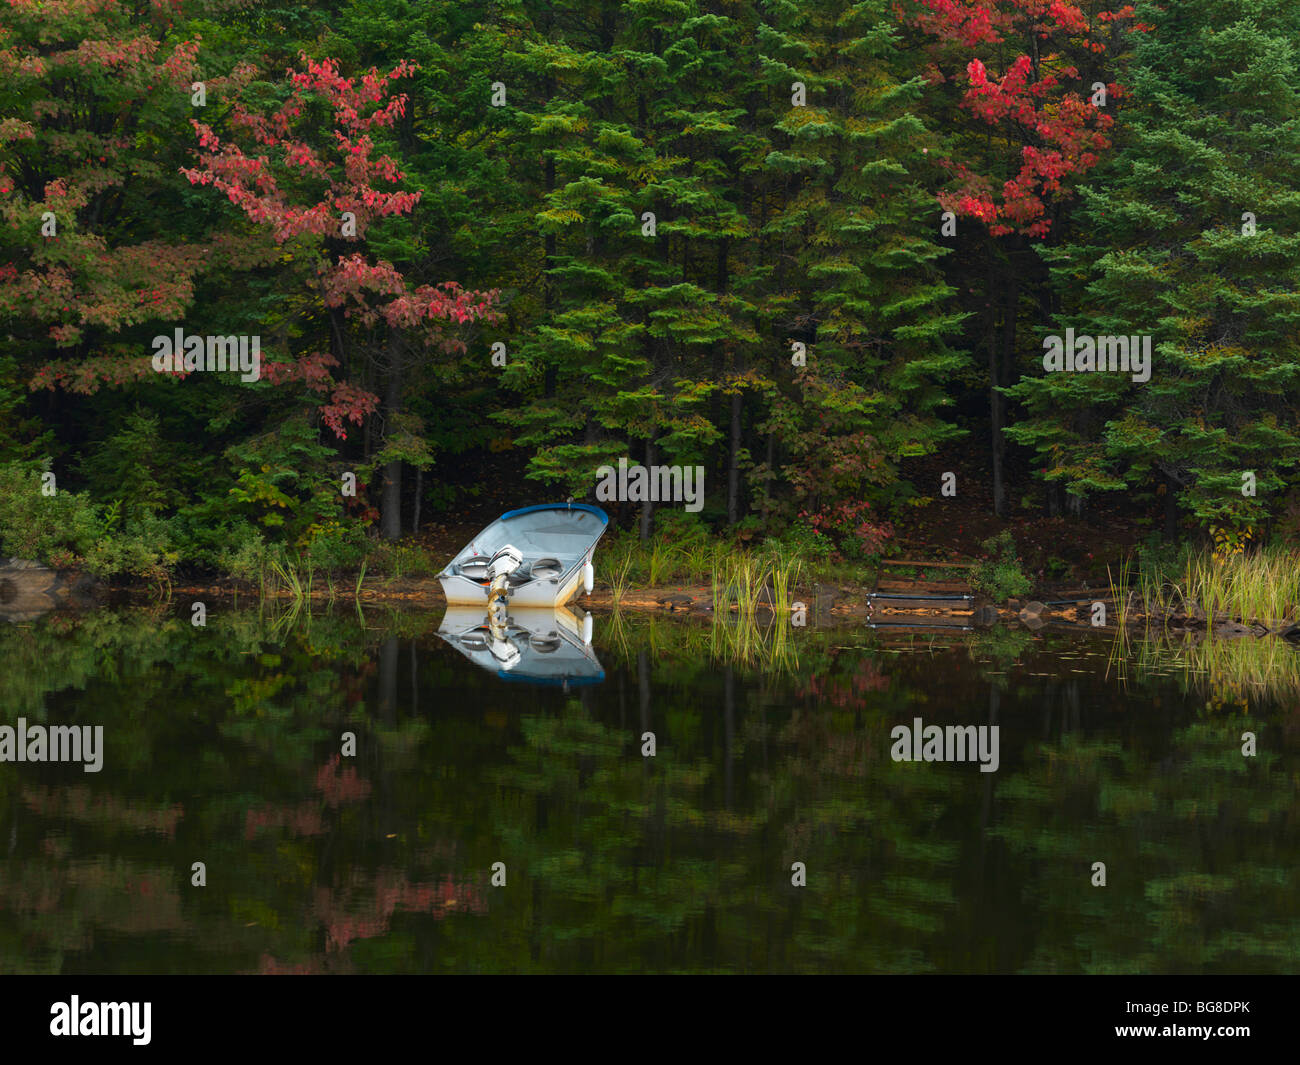 Kanu Seenlandschaft Herbst Natur. Algonquin Provincial Park, Ontario, Kanada. Stockfoto